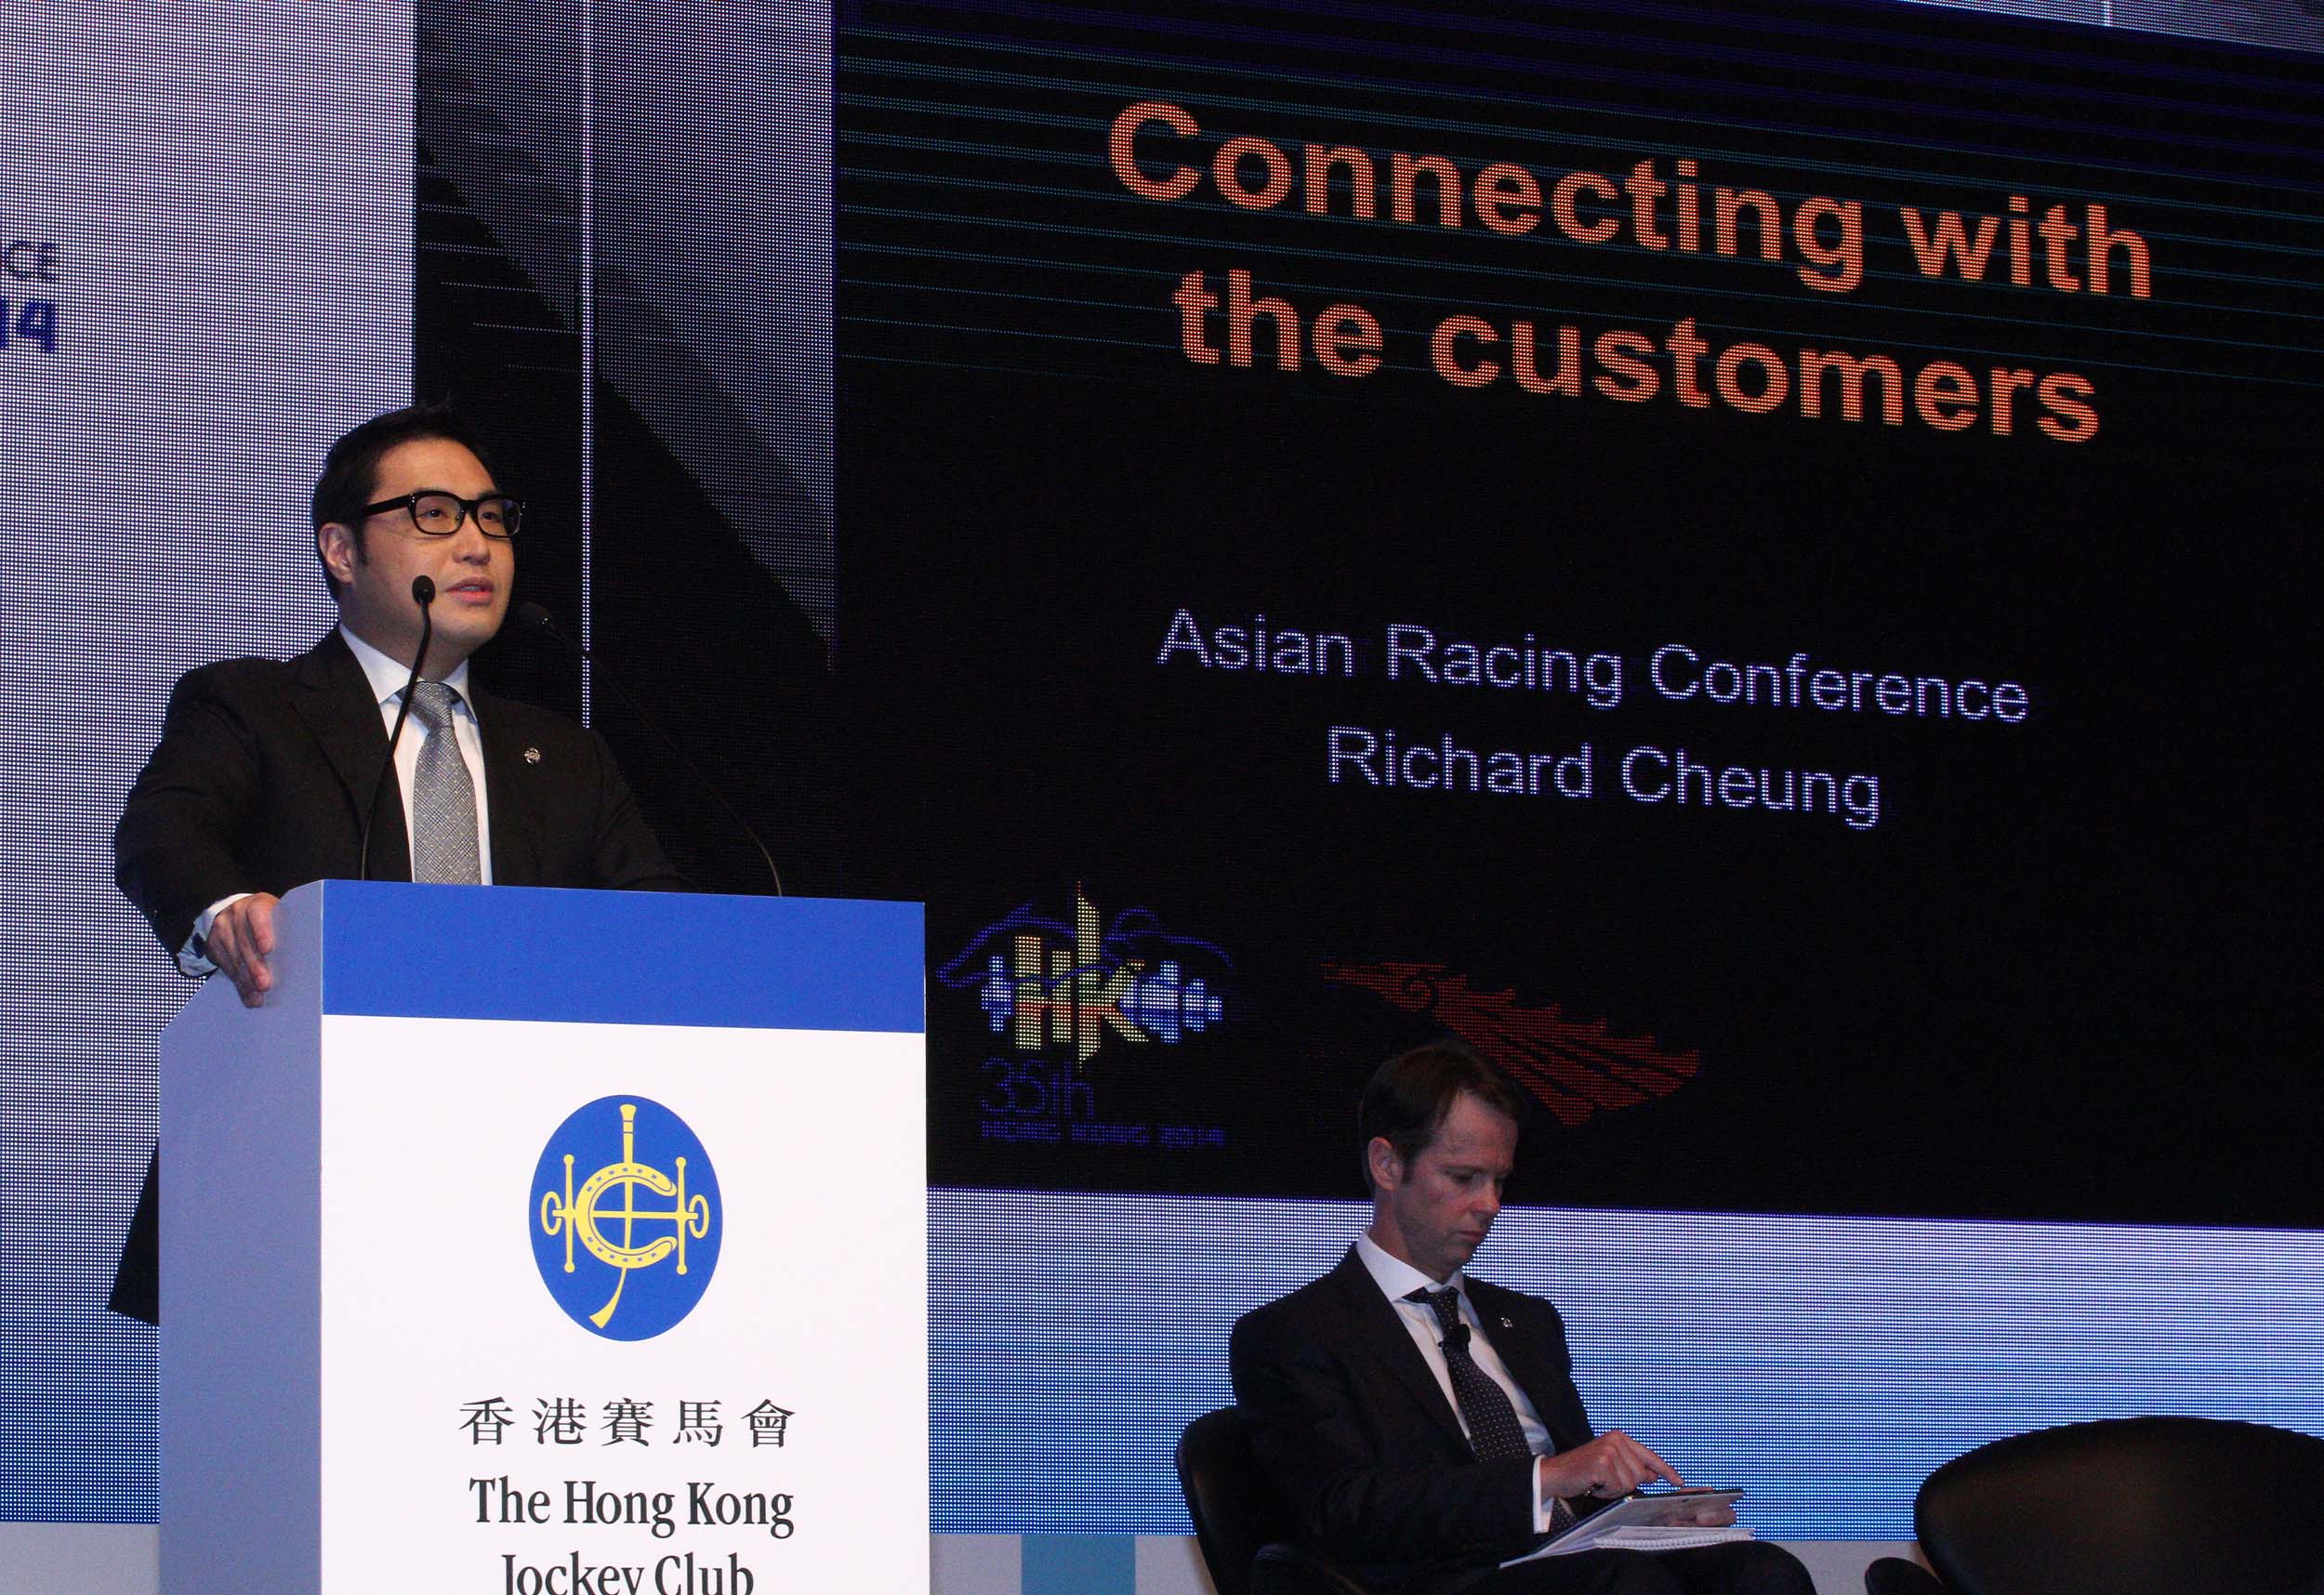 Richard Cheung, Executive Director, Customer and Marketing of the Hong Kong Jockey Club, presents his views to all attending delegates.